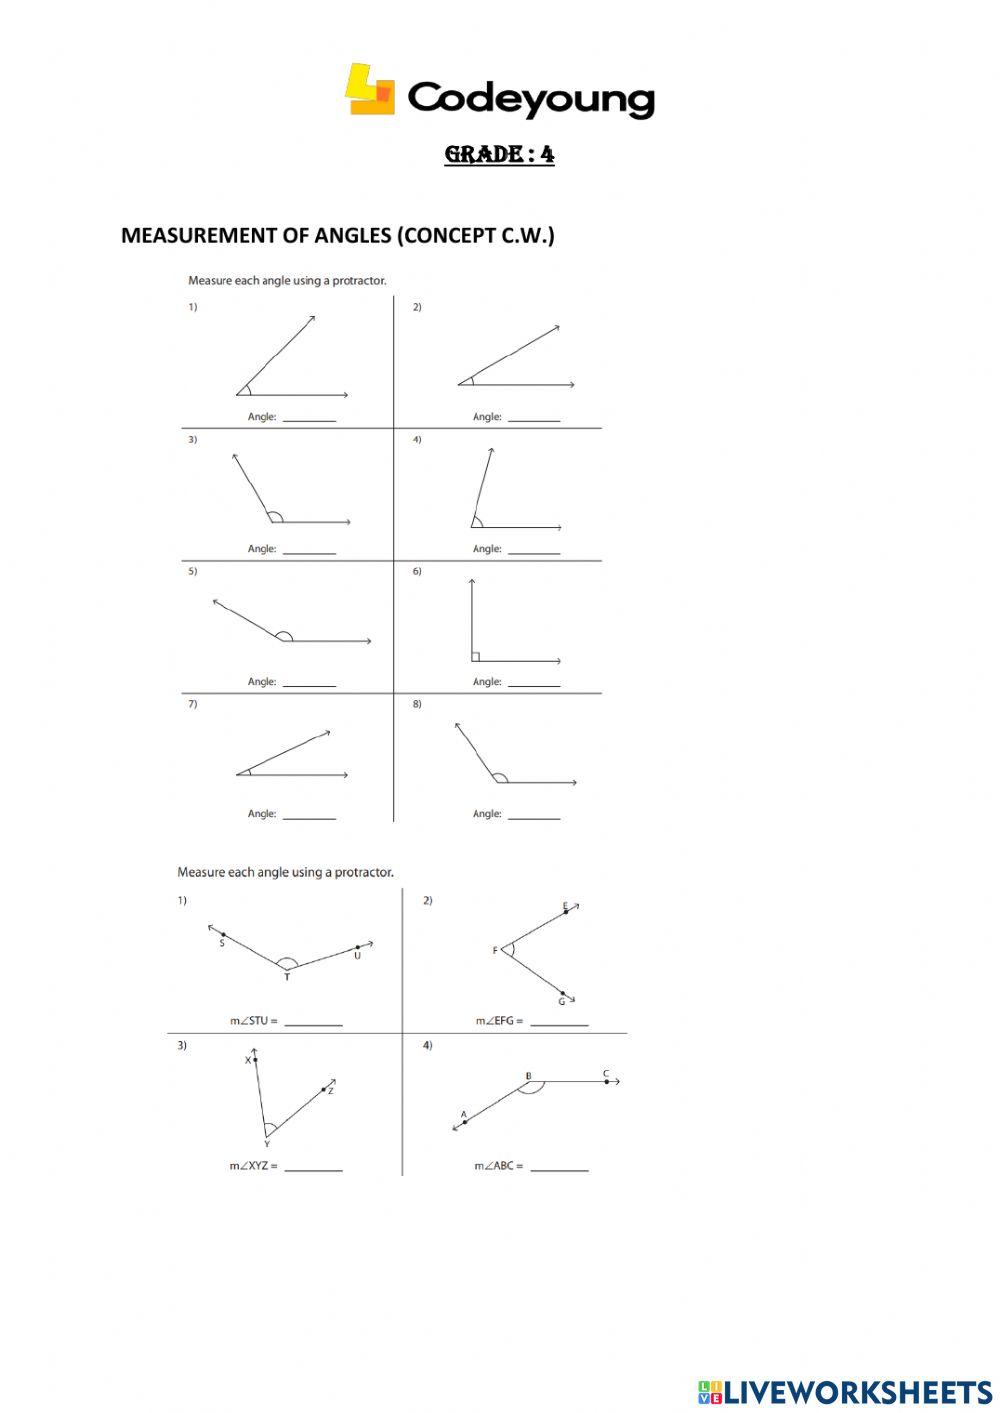 Measurement of angles (concept c.w.)(1)